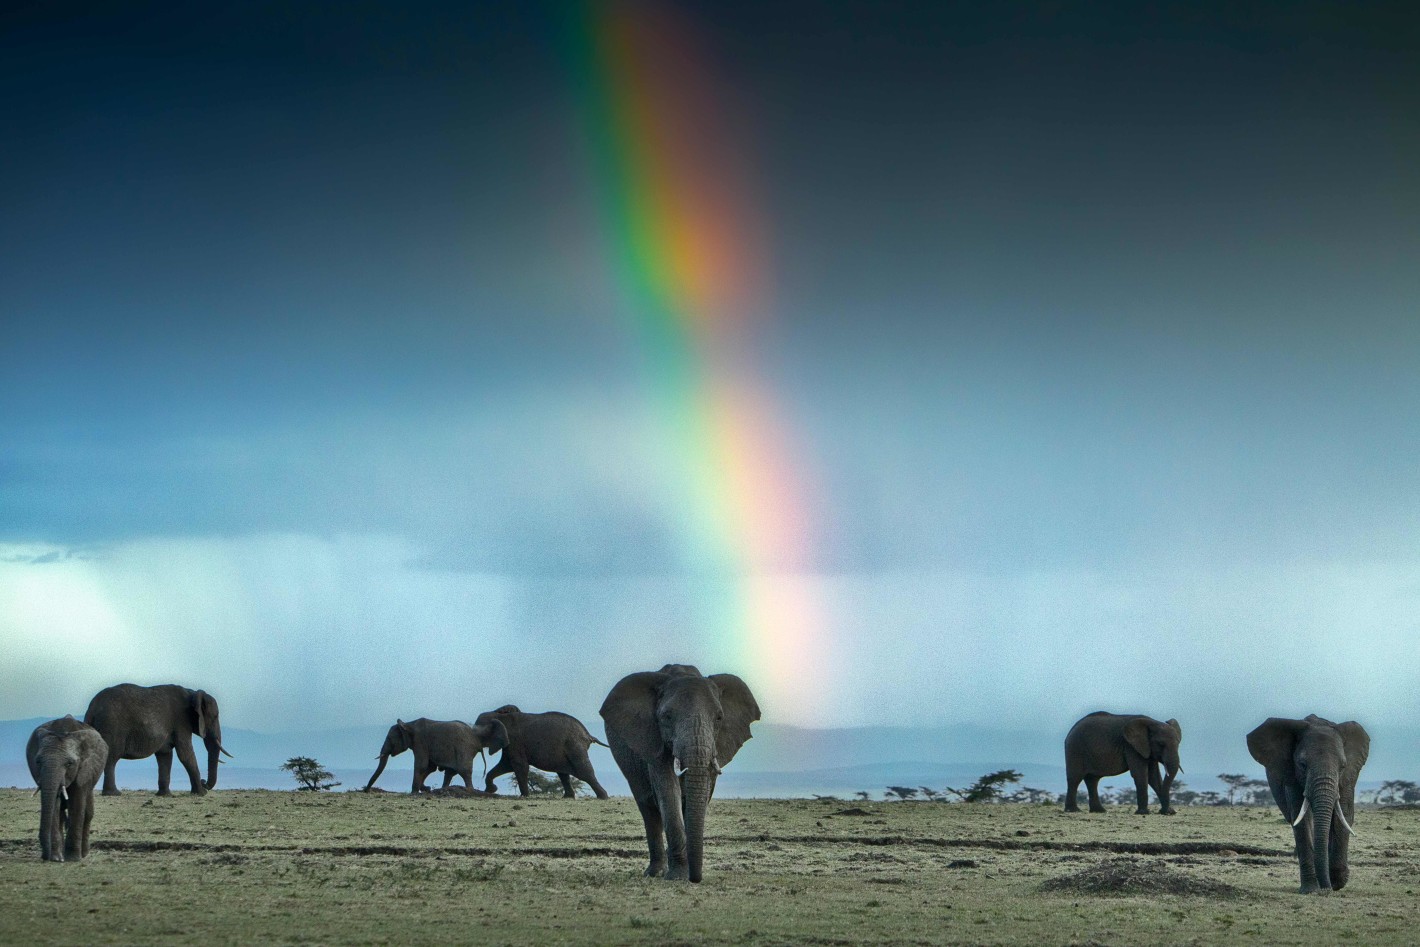 Rainbow with elephant